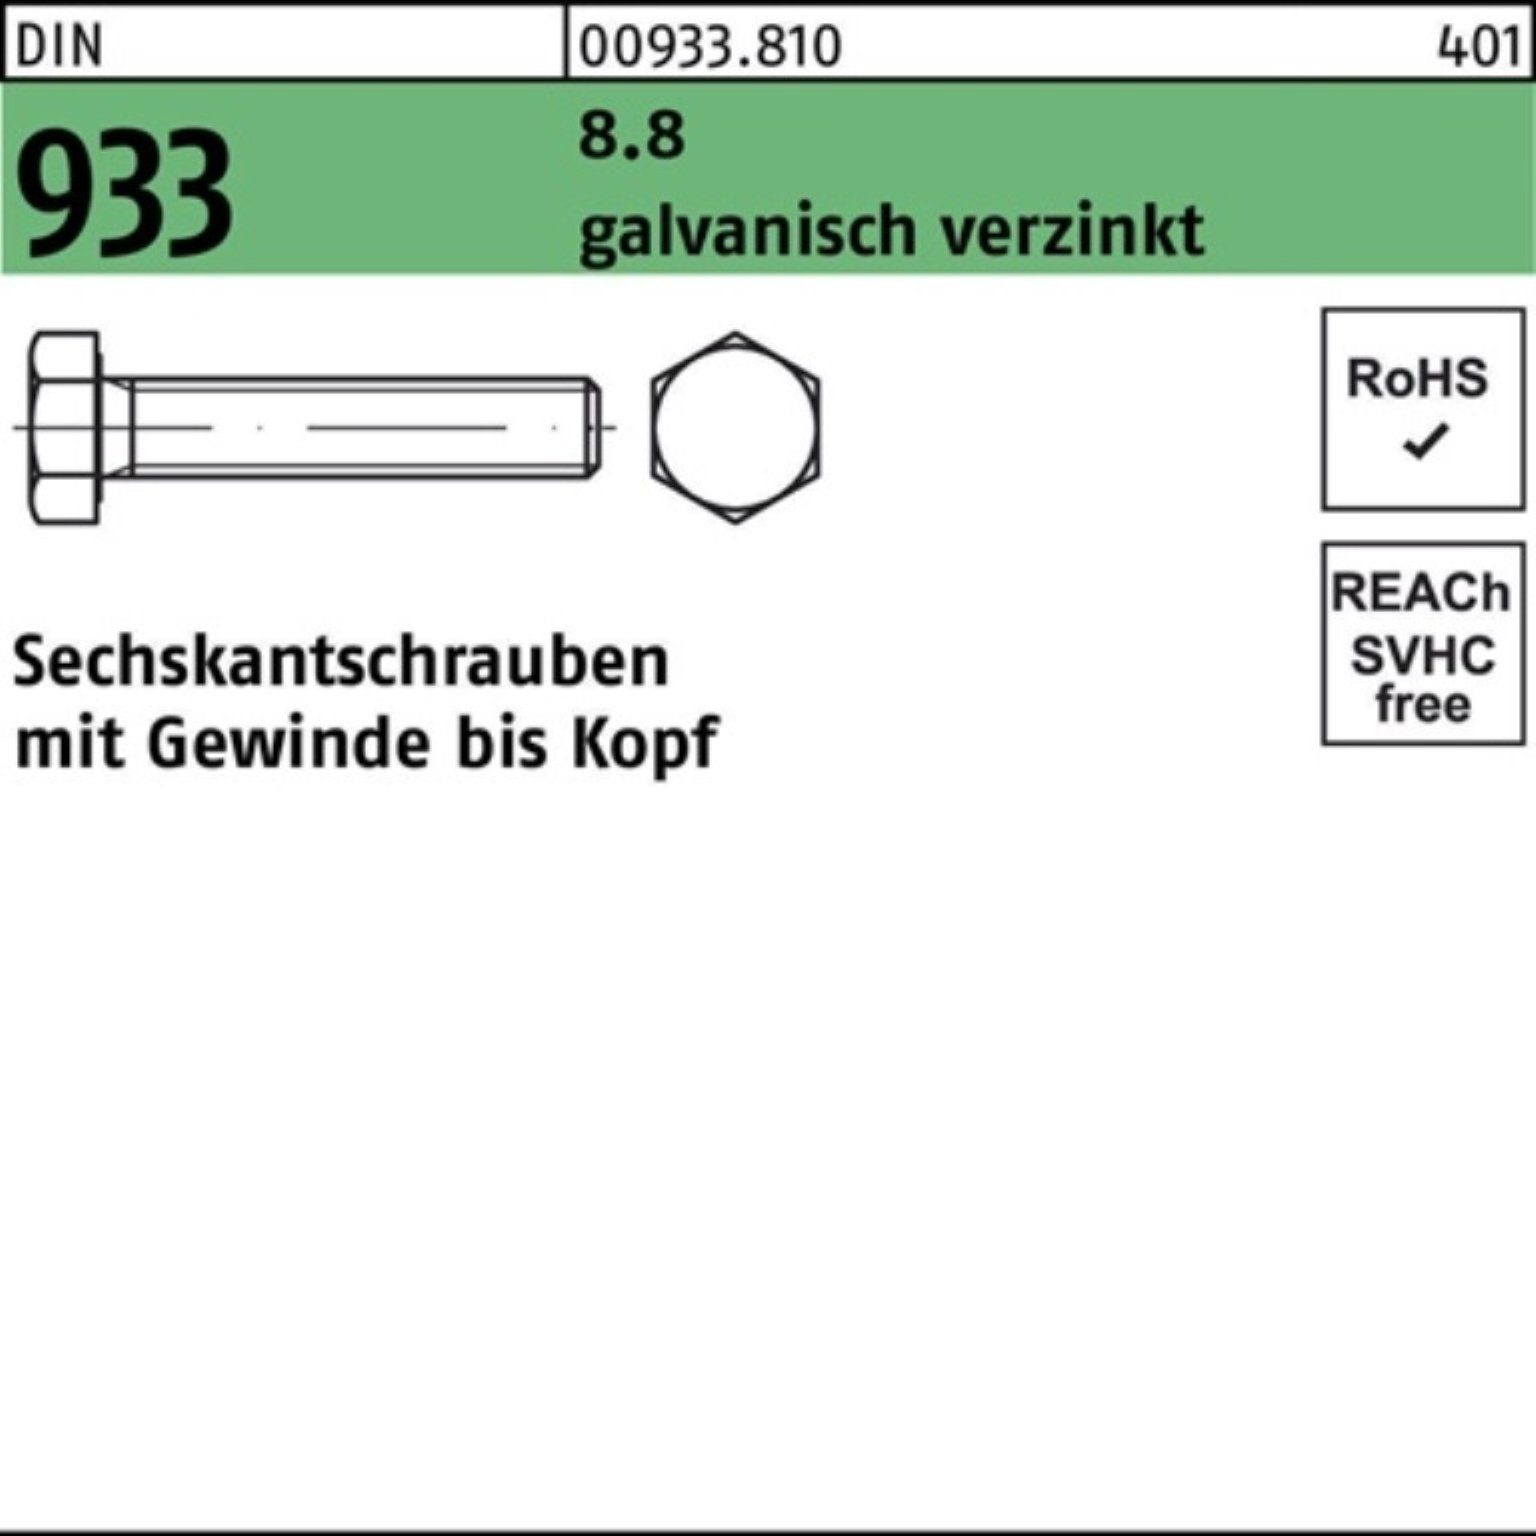 1 VG Pack DIN Stüc 75 galv.verz. 933 M36x Sechskantschraube 100er Sechskantschraube 8.8 Reyher